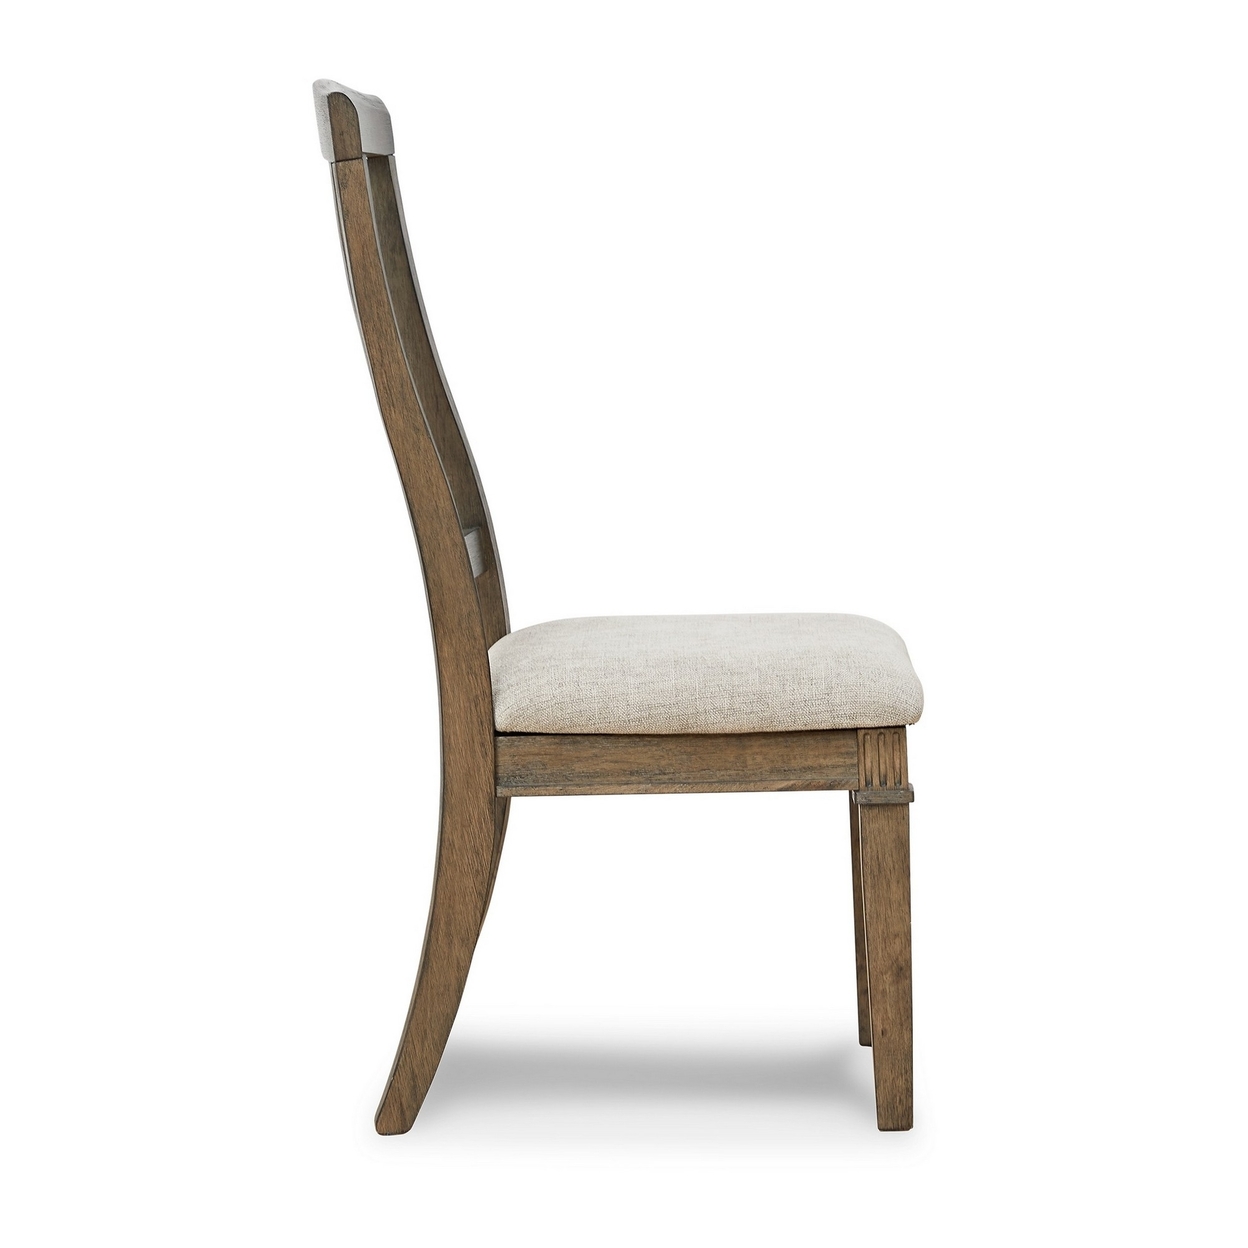 19 Inch Dining Chair, Set Of 2, Slatted Back, Brown Wood, Beige Polyester- Saltoro Sherpi